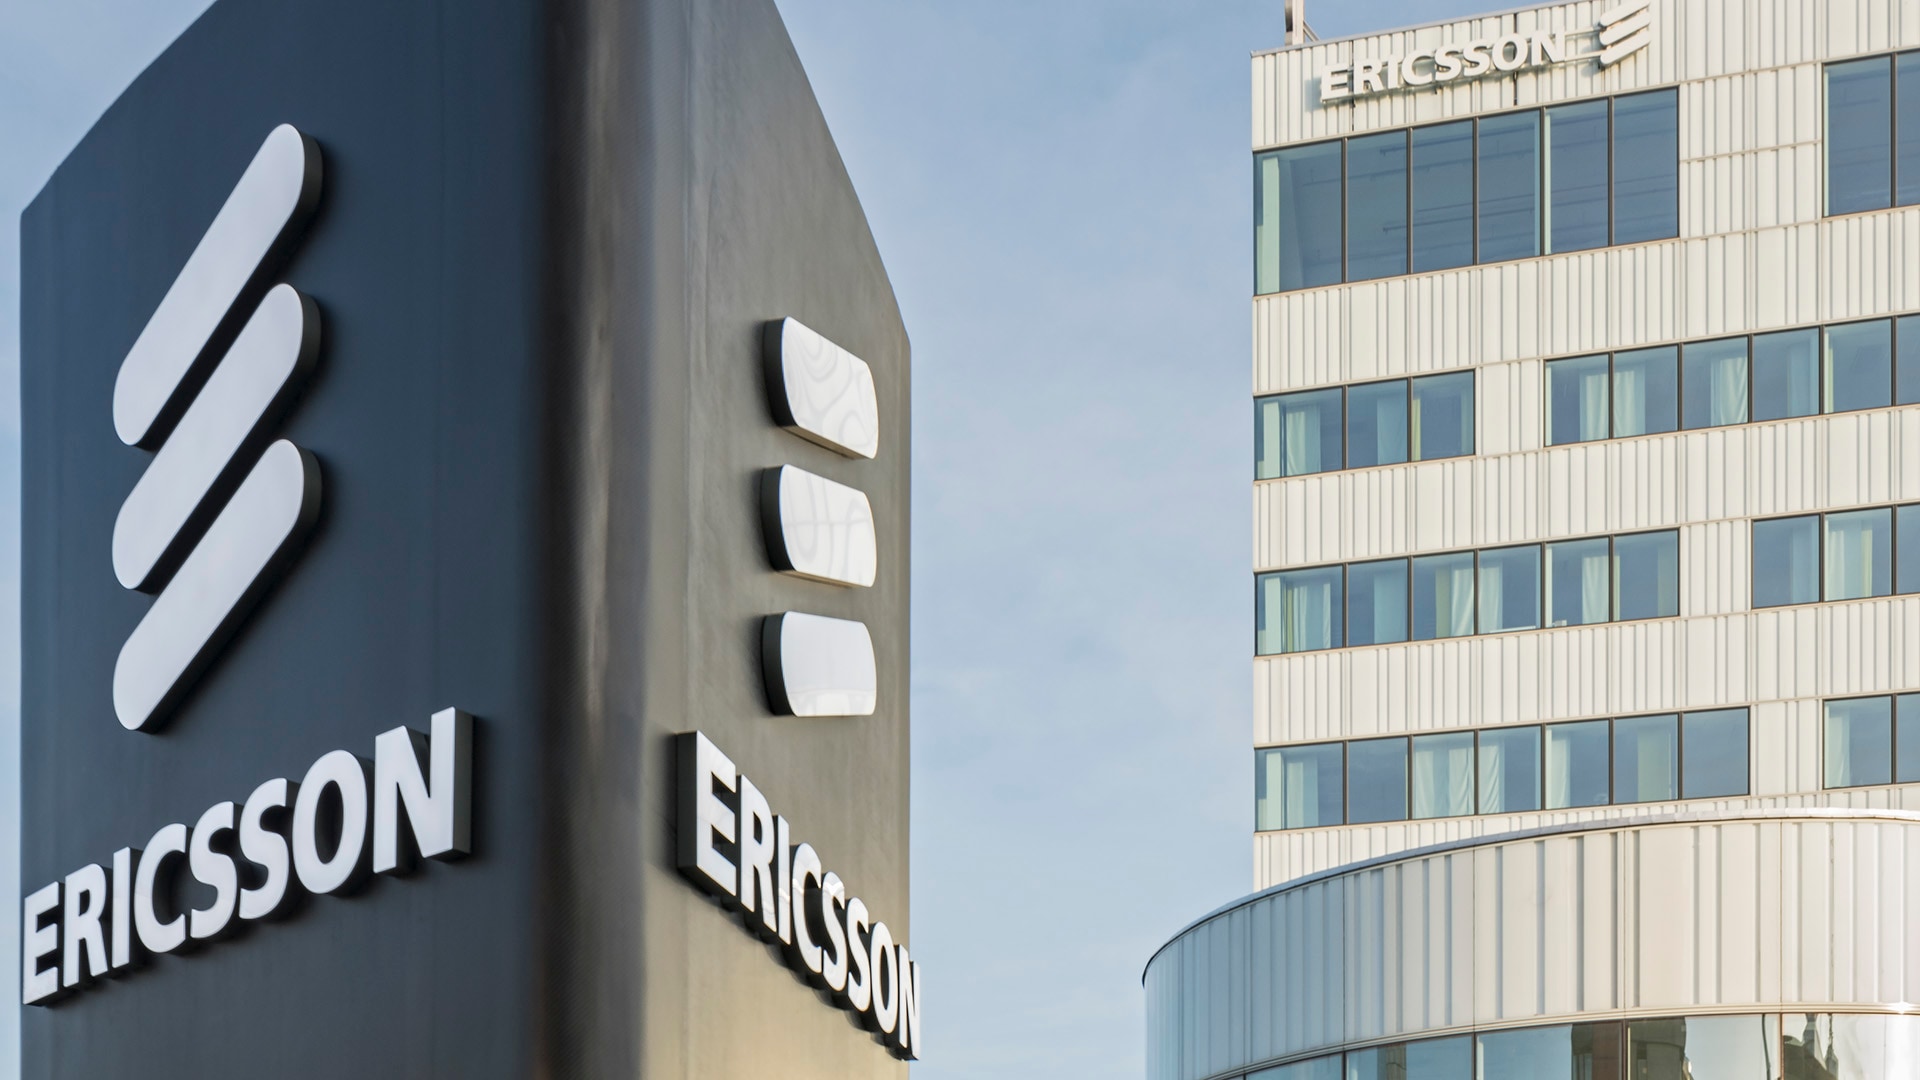 Ericsson မှ Cloud ကုမ္ပဏီတစ်ခုဖြစ်တဲ့ Vonage ကို ကန်ဒေါ်လာ ၆.၂ ဘီလျံဖြင့်ဝယ်ယူရန် သဘောတူညီချက်ရရှိခဲ့